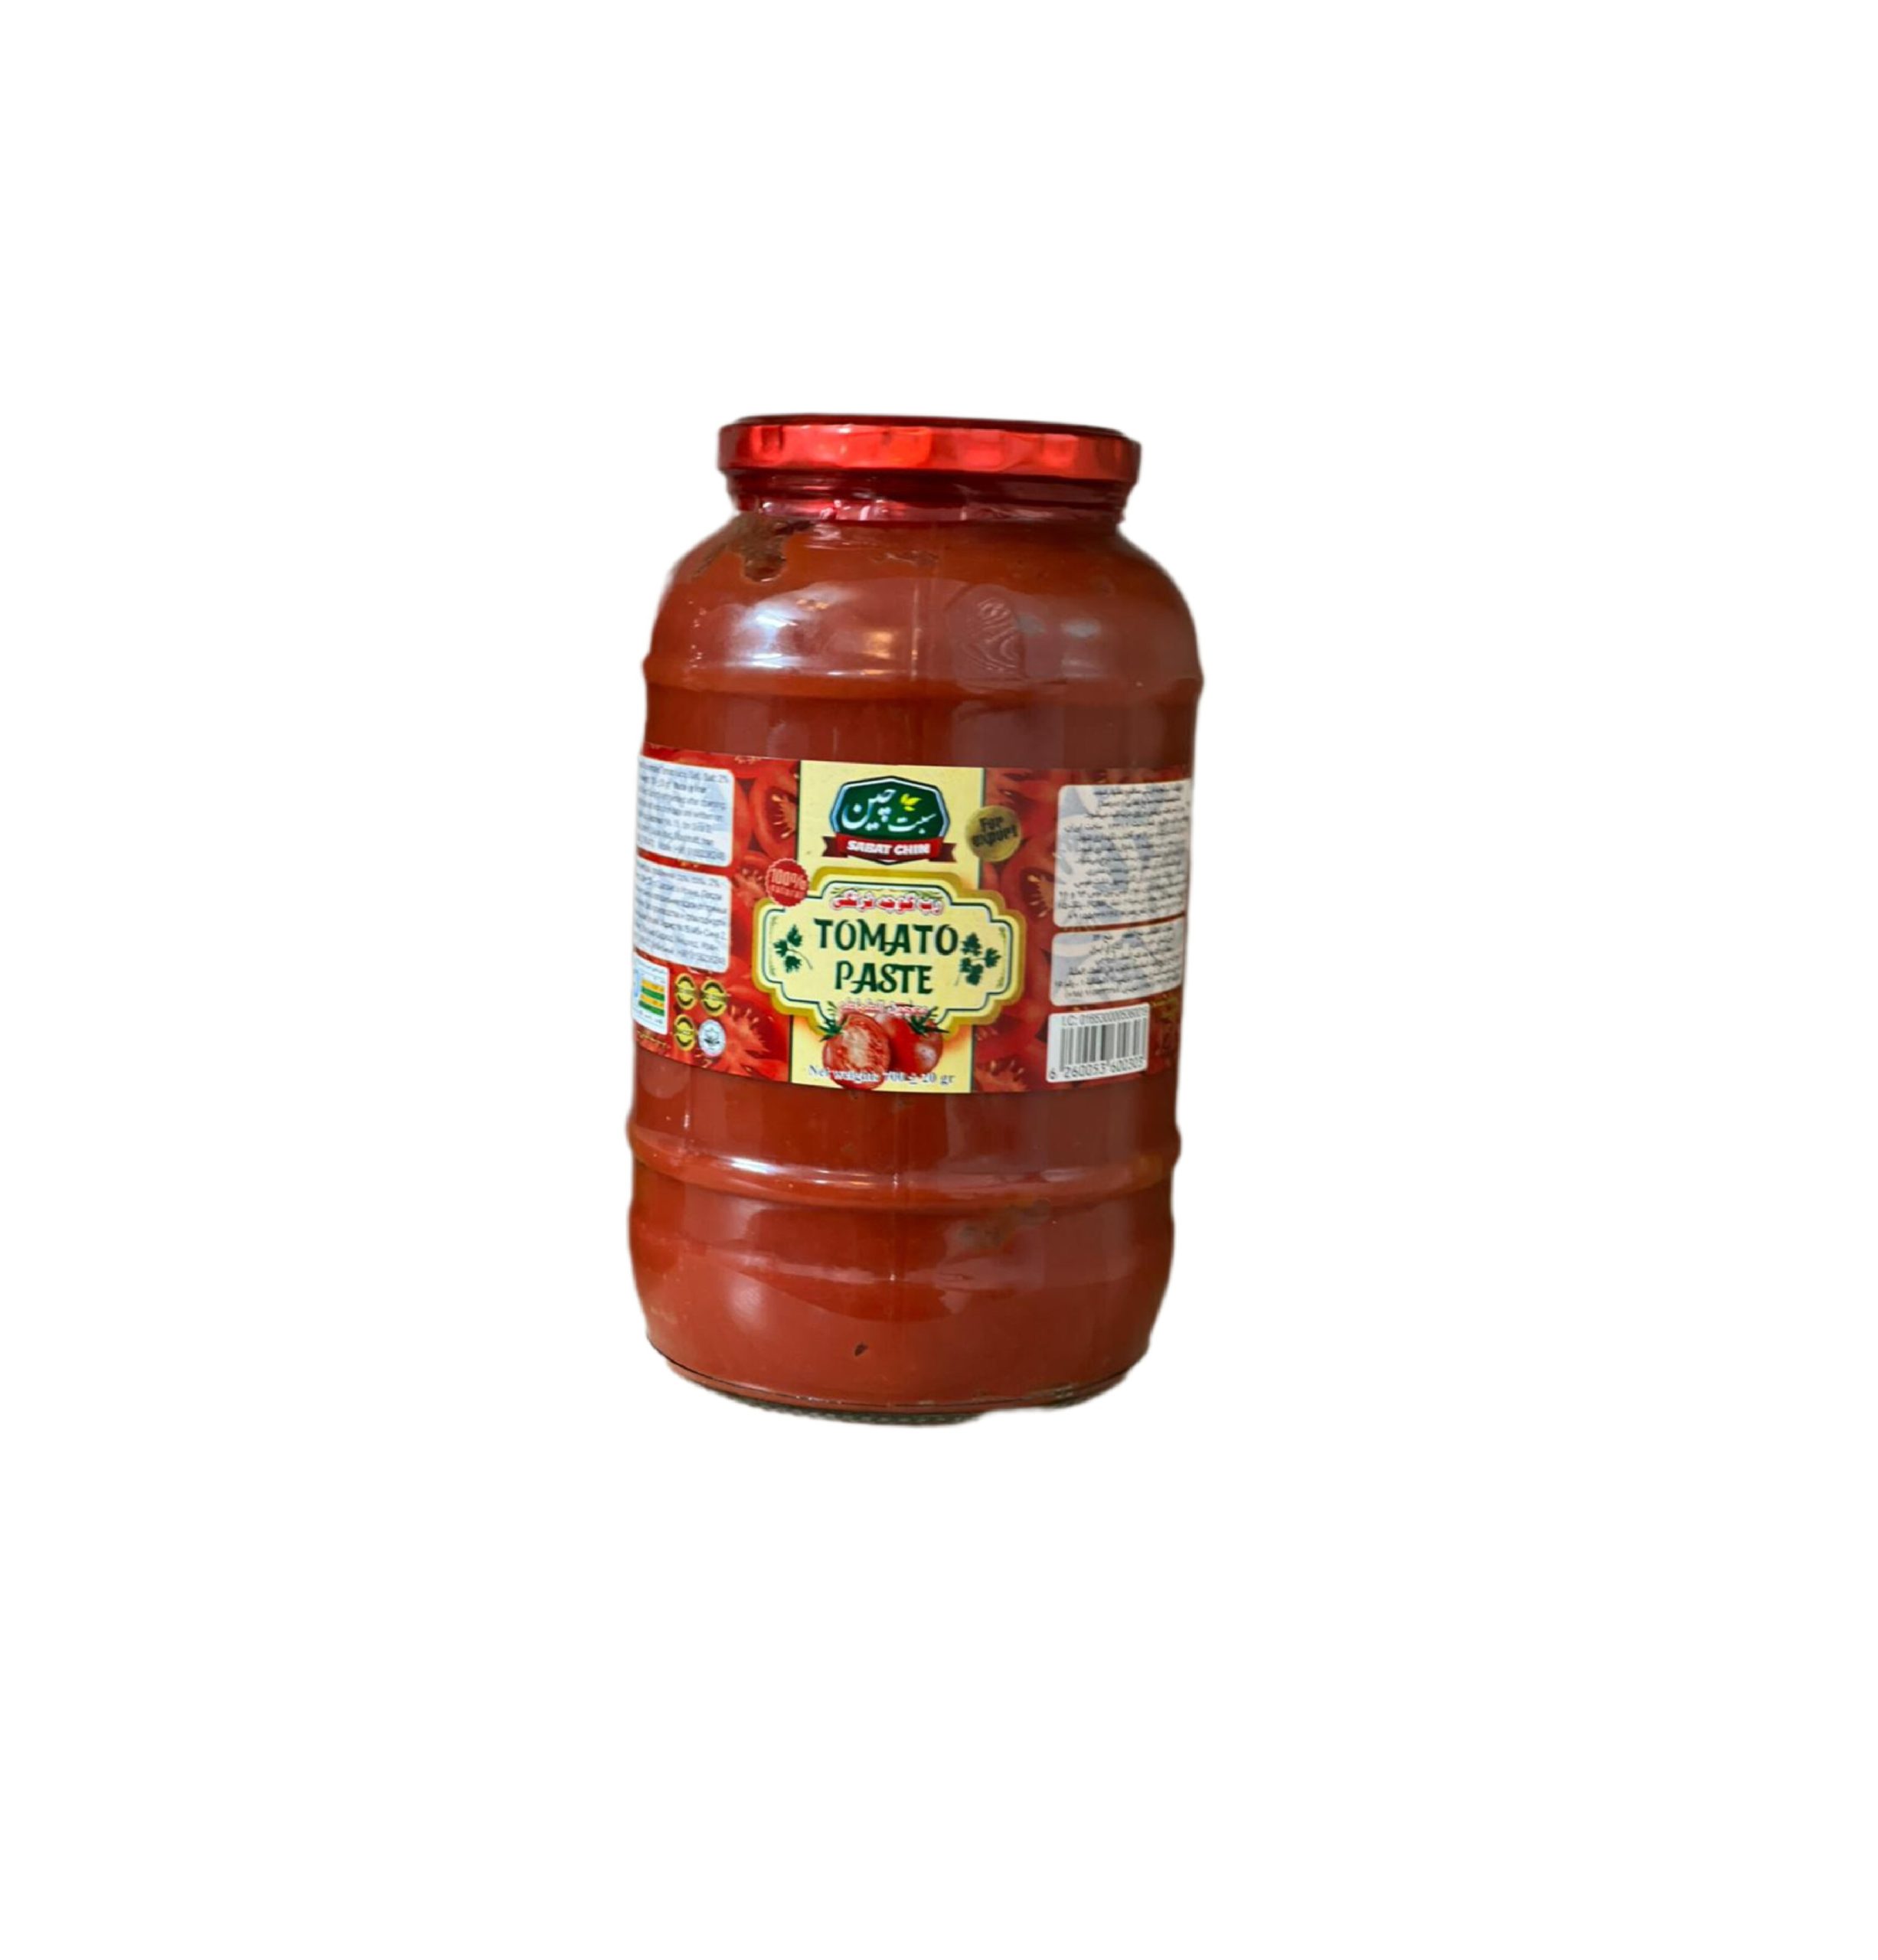 tomato paste Sabatchin jar (1500g)